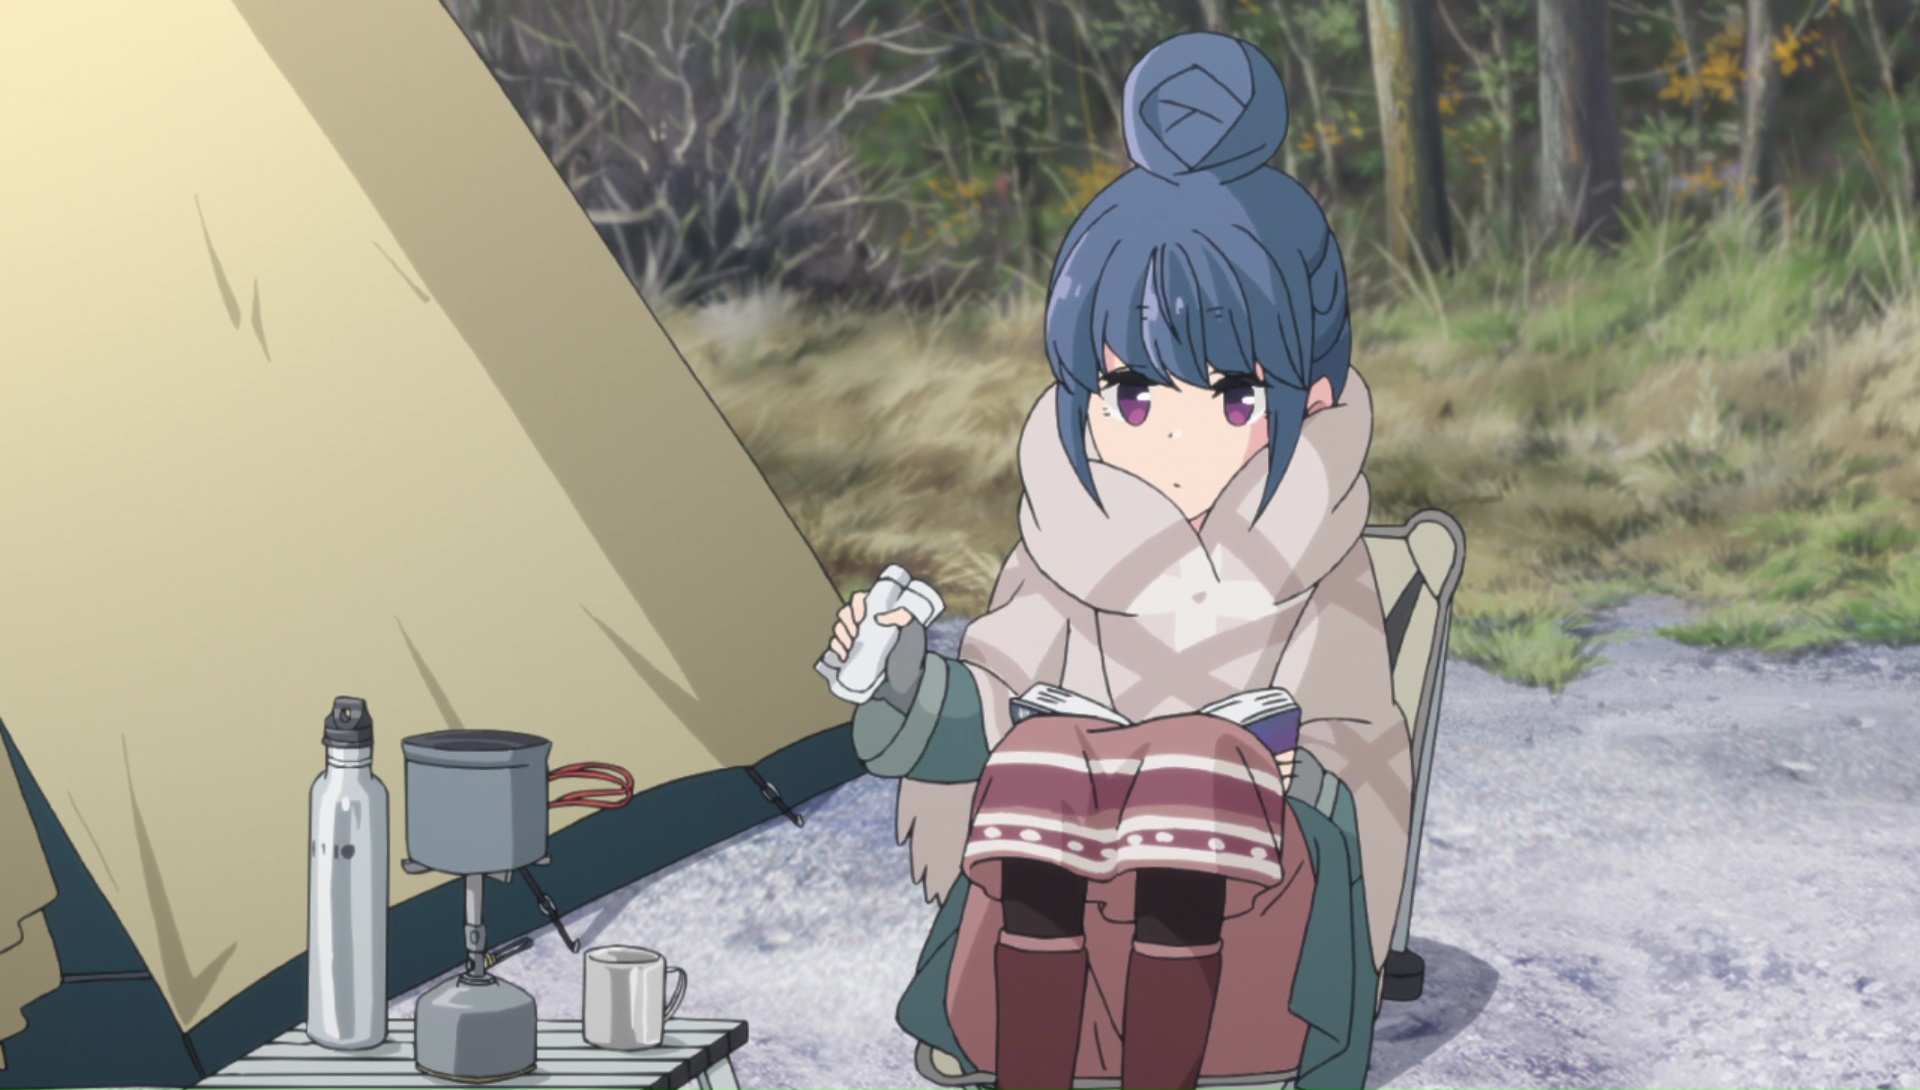 Yuru camping